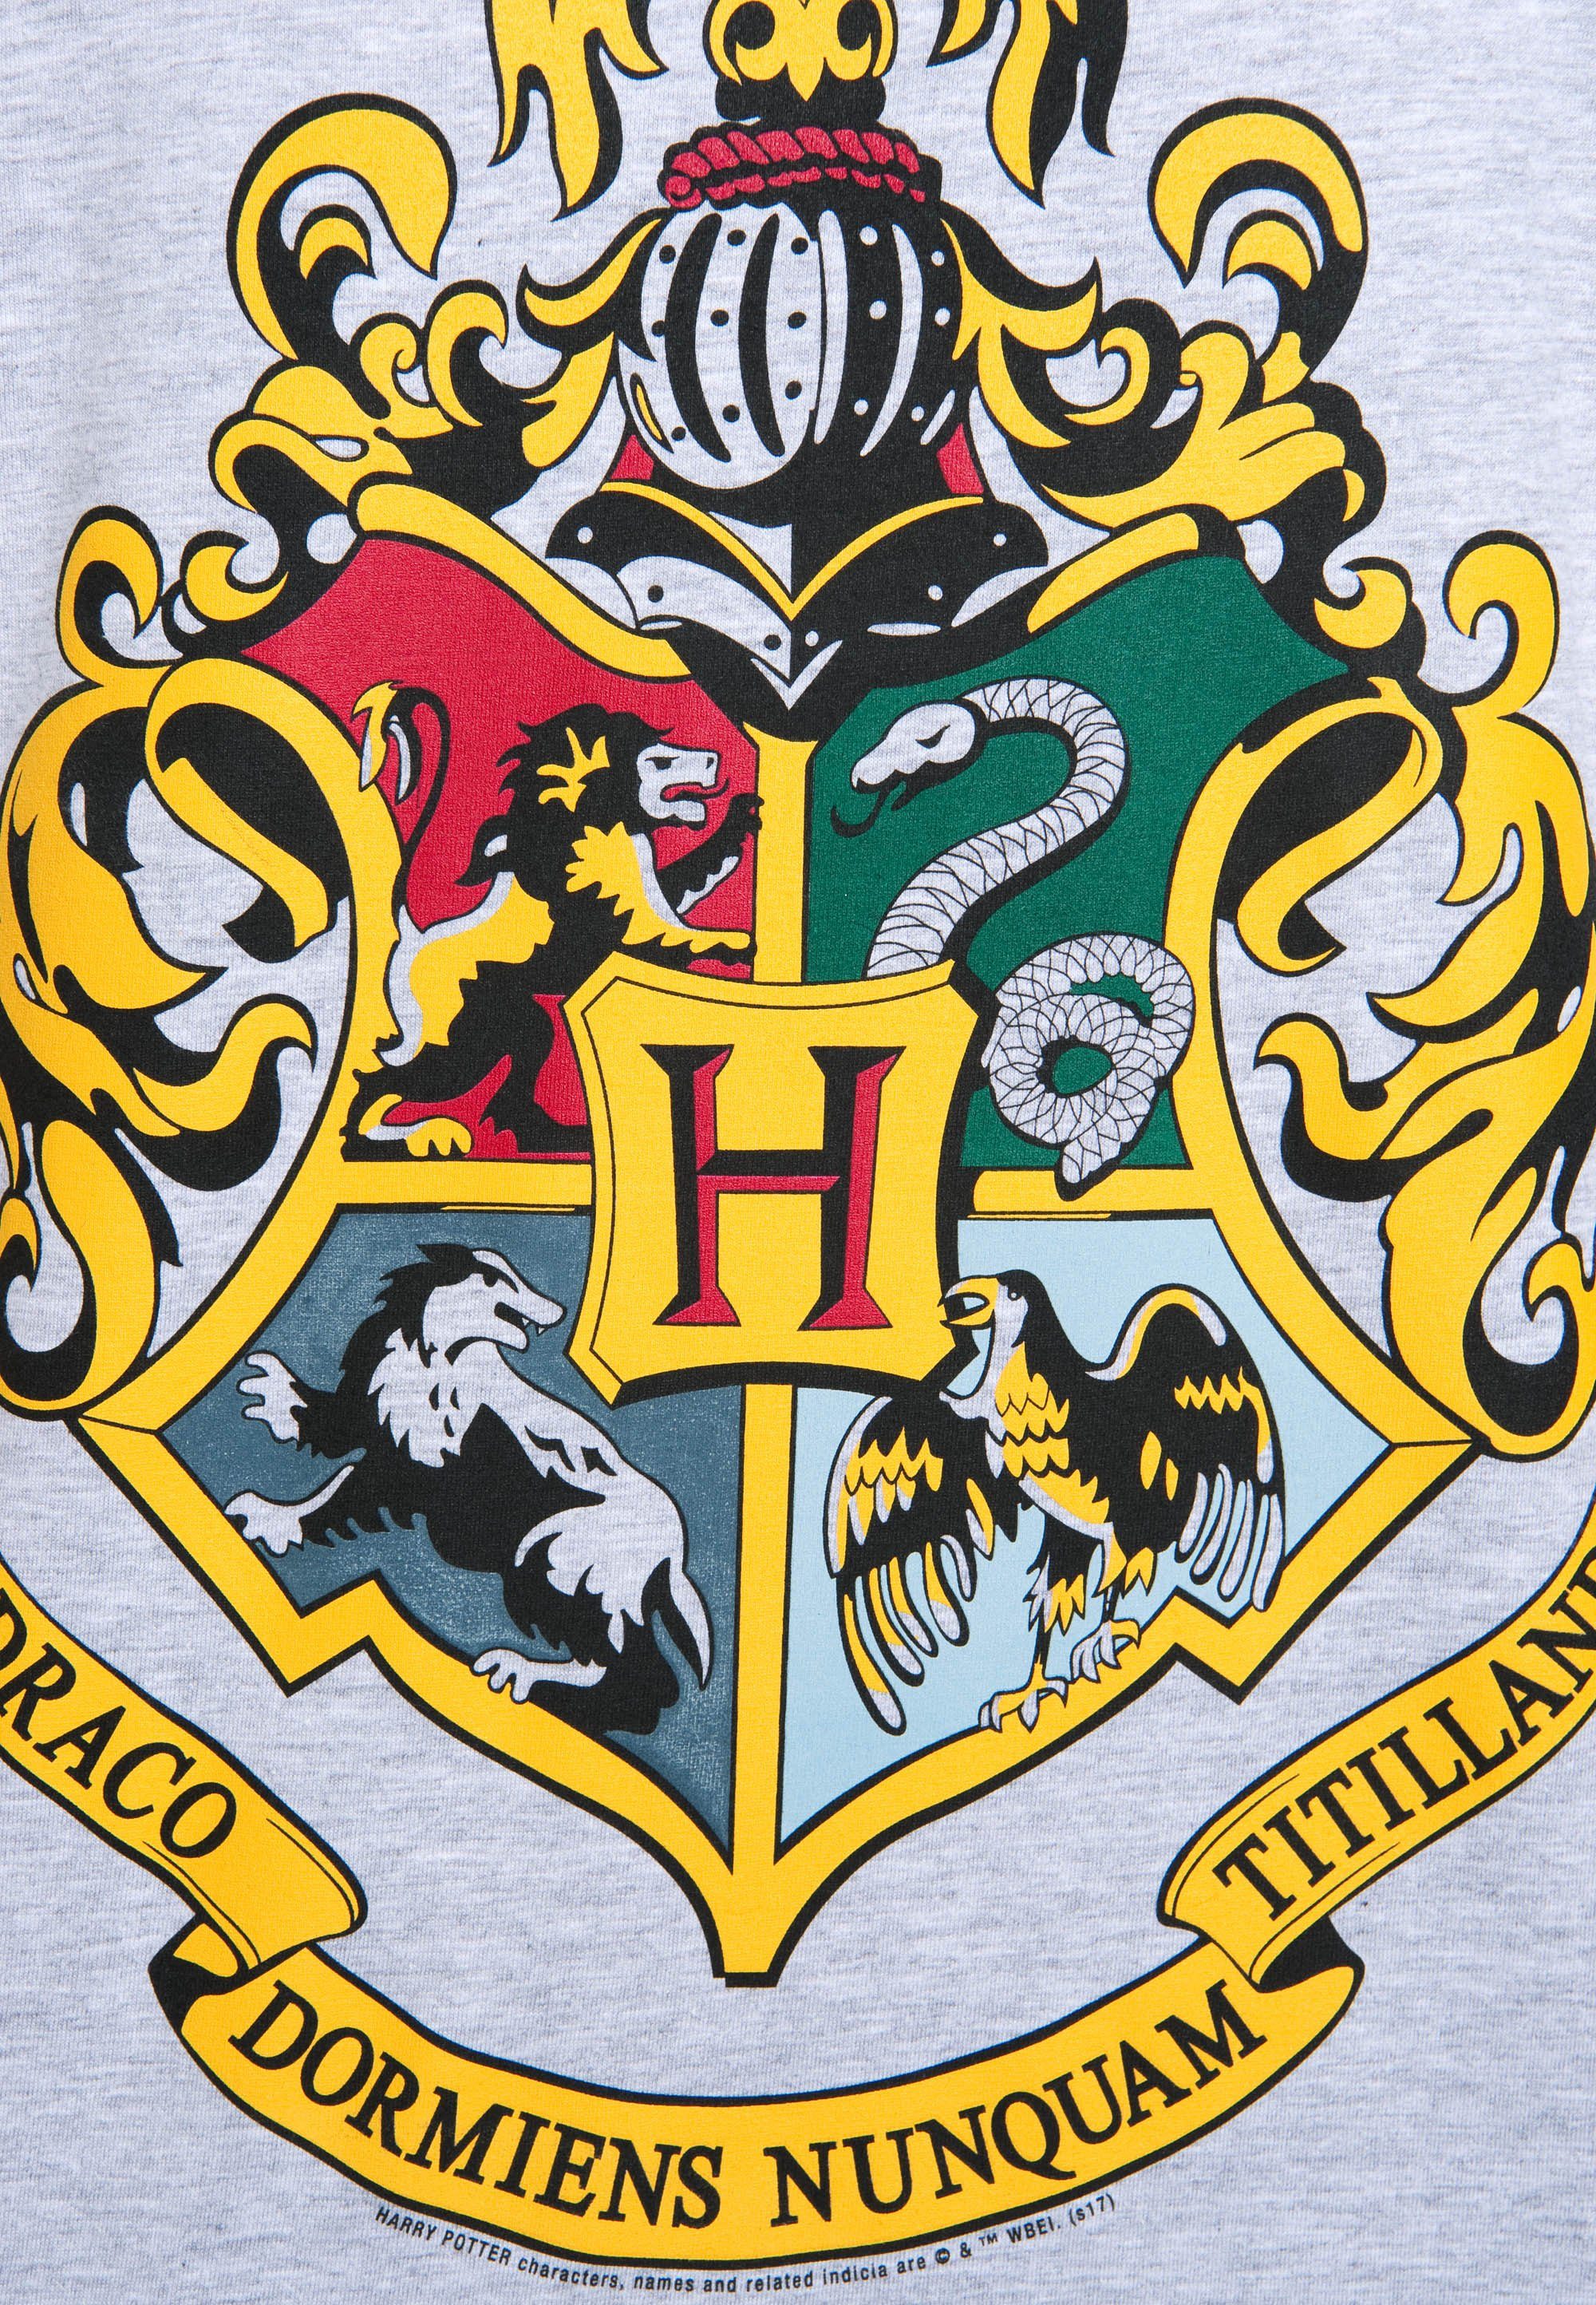 Hogwarts-Logo hochwertigem LOGOSHIRT Siebdruck T-Shirt mit